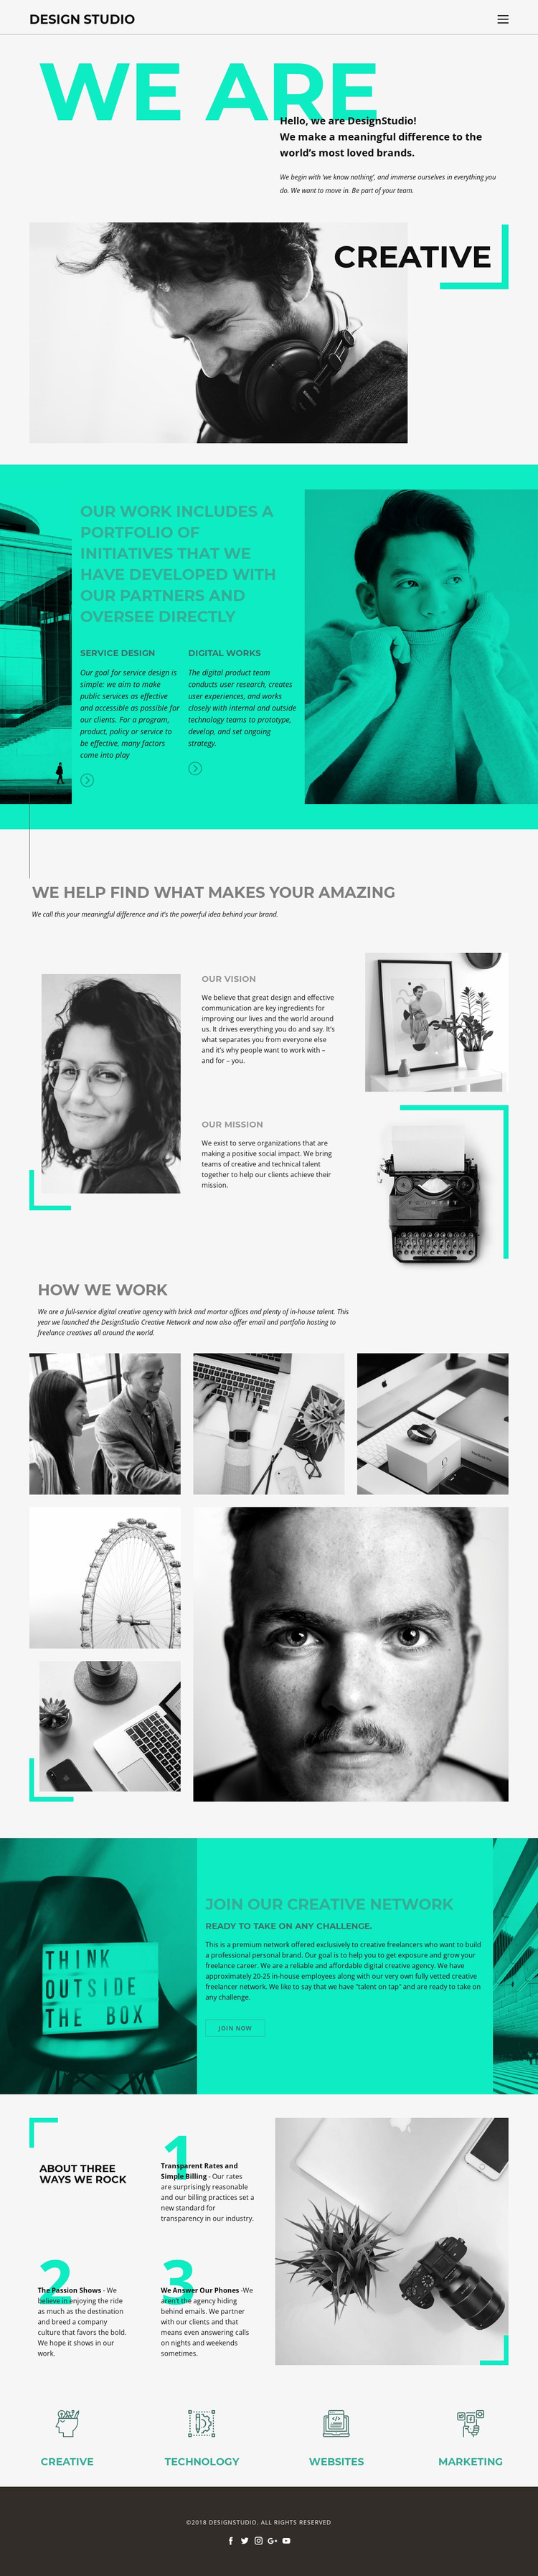 We are creative business Website Mockup